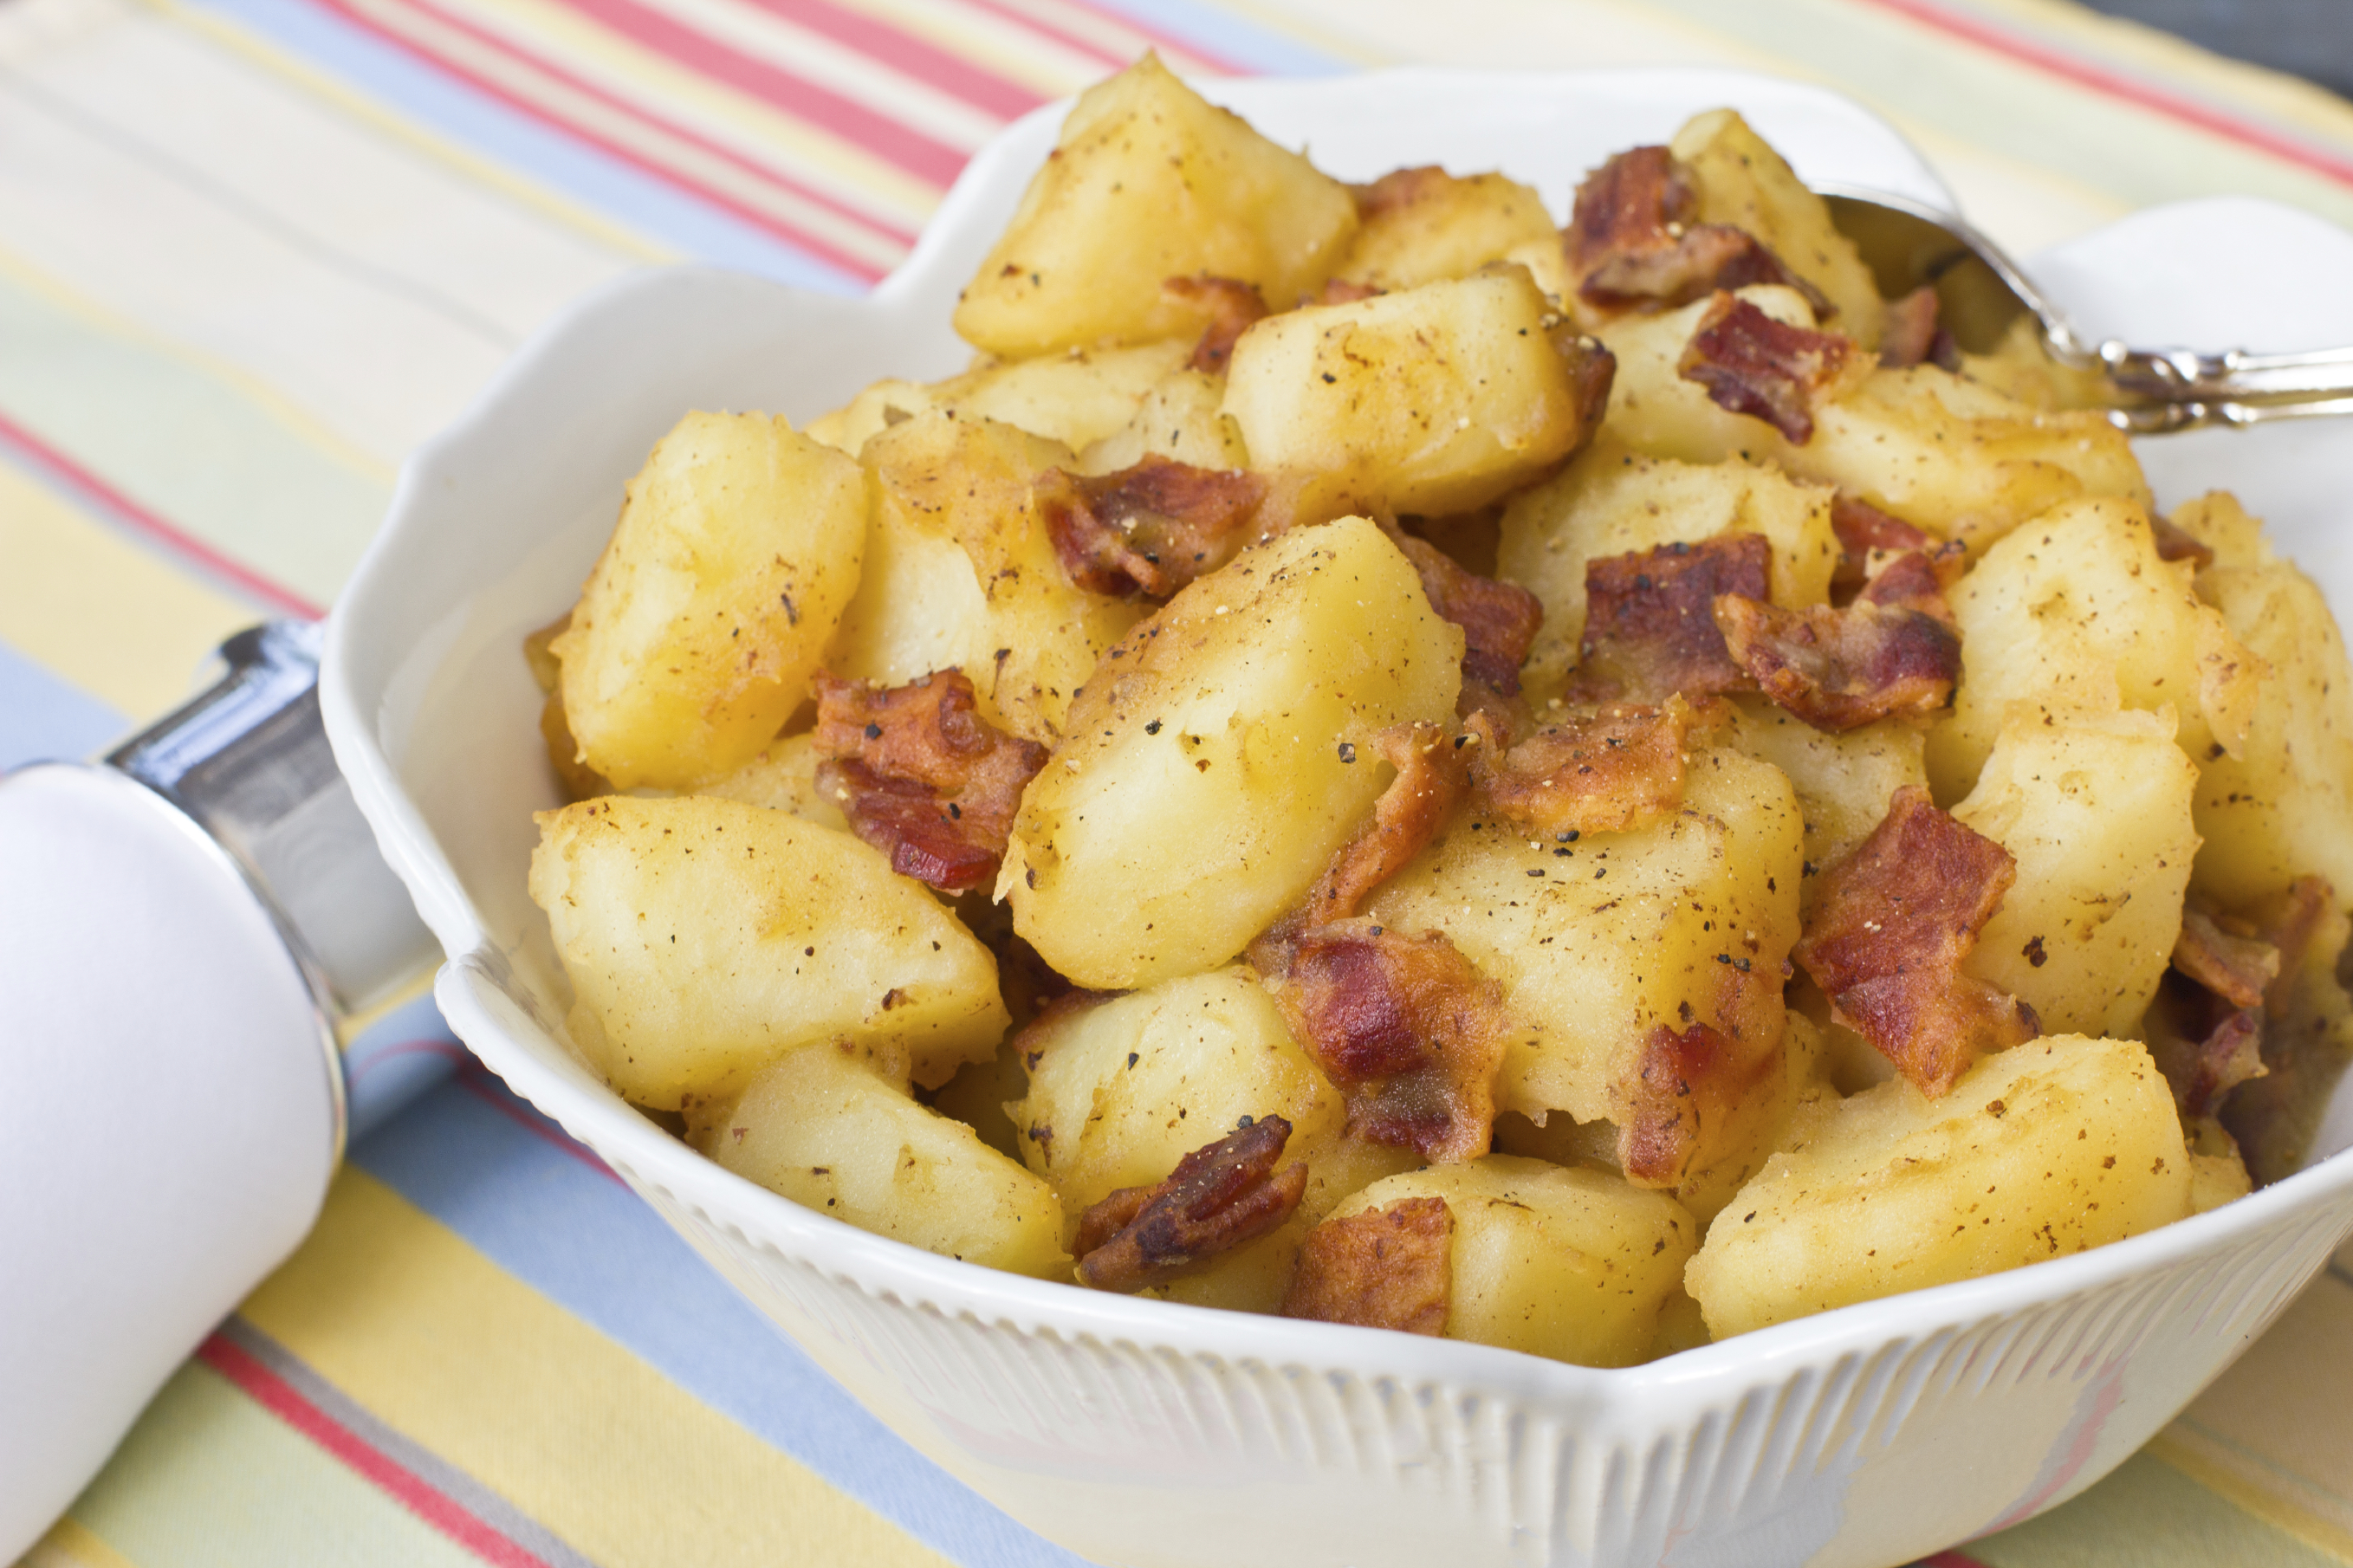 Can i steam potatoes for potato salad фото 105